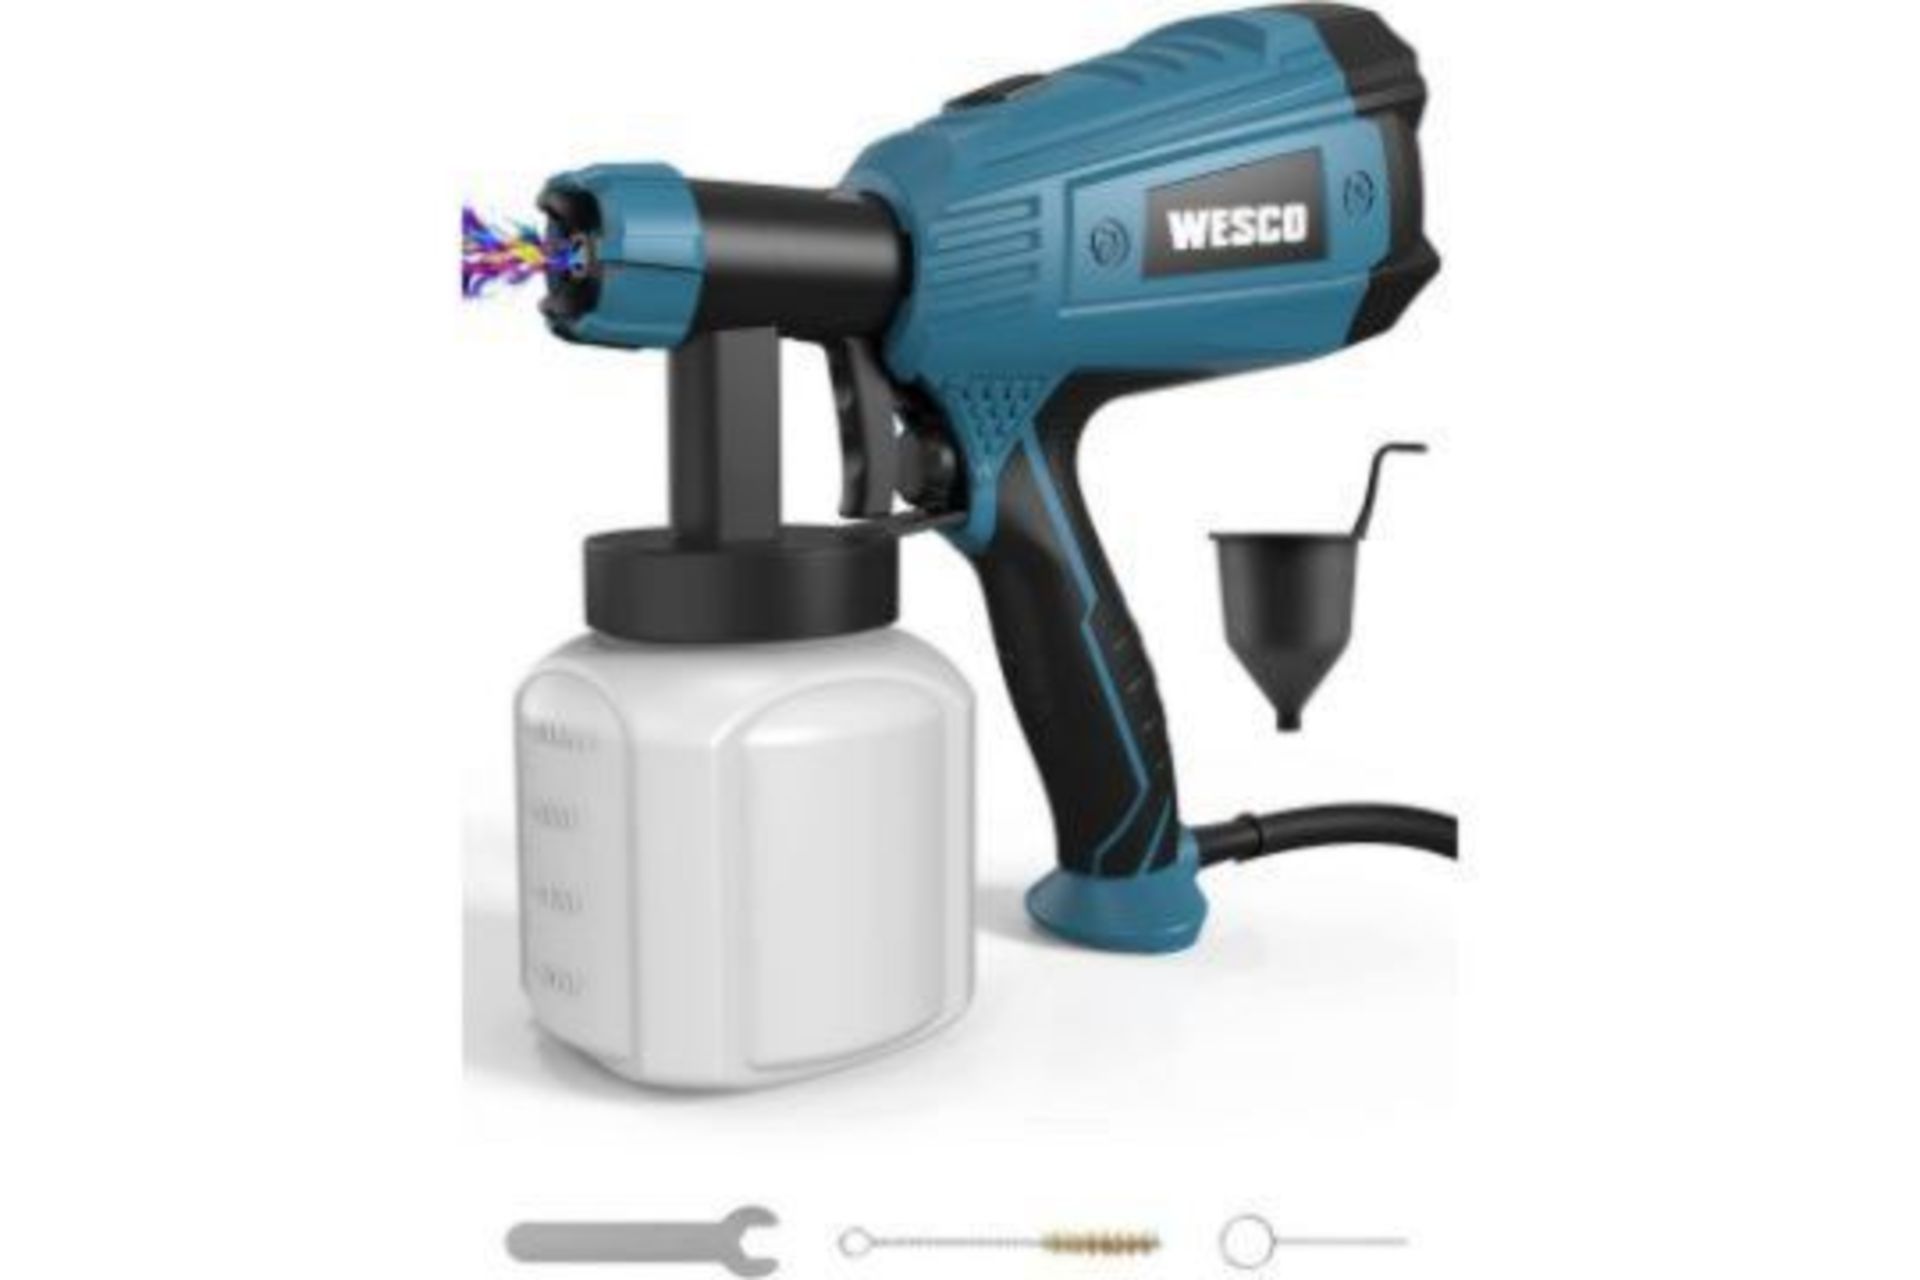 2 X NEW BOXED WESCO Paint Sprayer, WESCO 500W DIY Electric Spray Gun with 3 Spray Patterns, 3 Nozzle